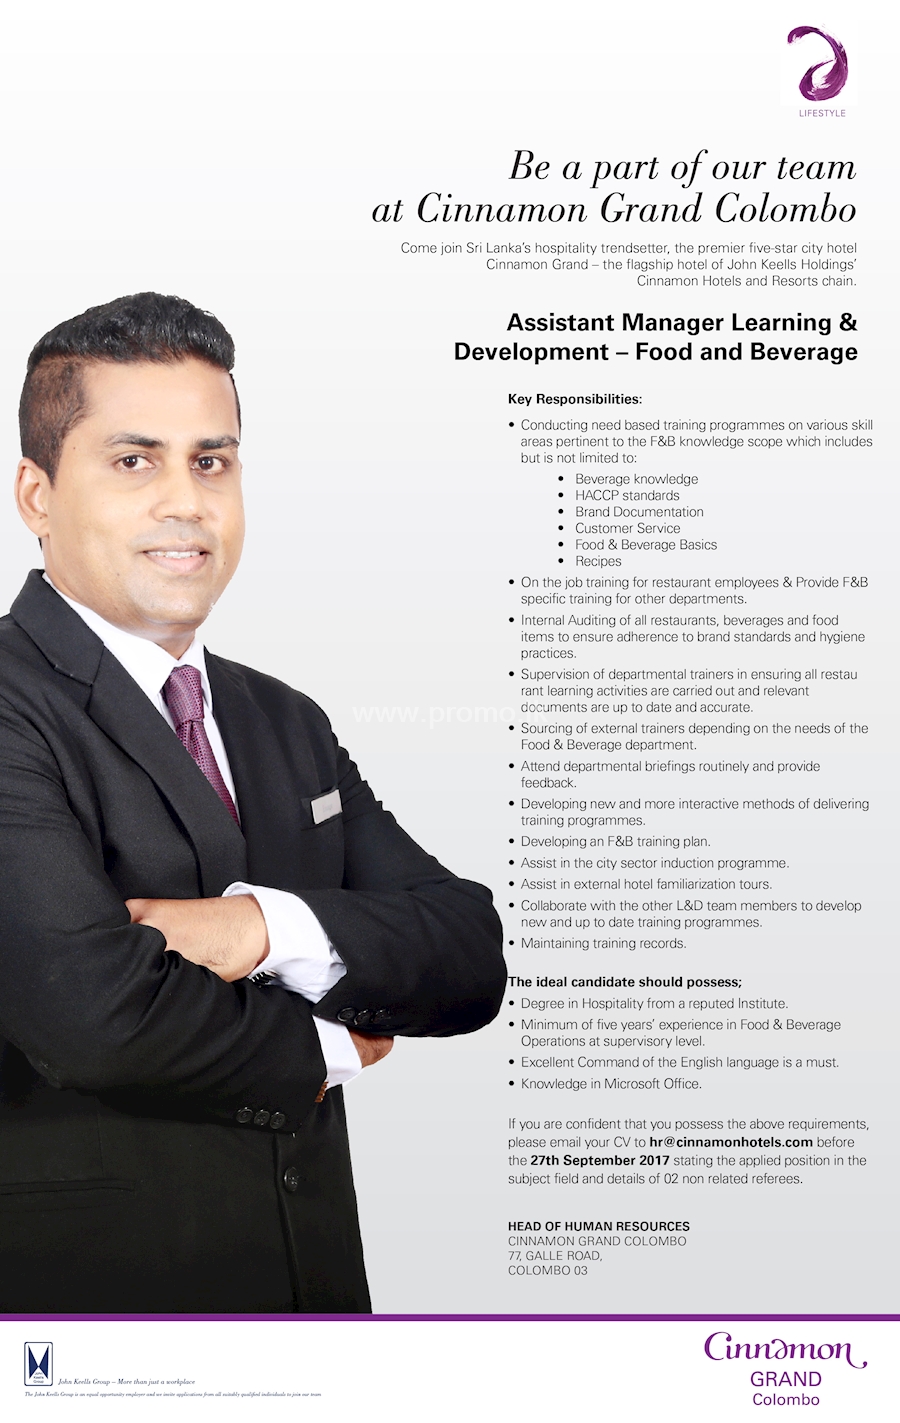 Assistant Manager Learning & Development - Food & Beverage 